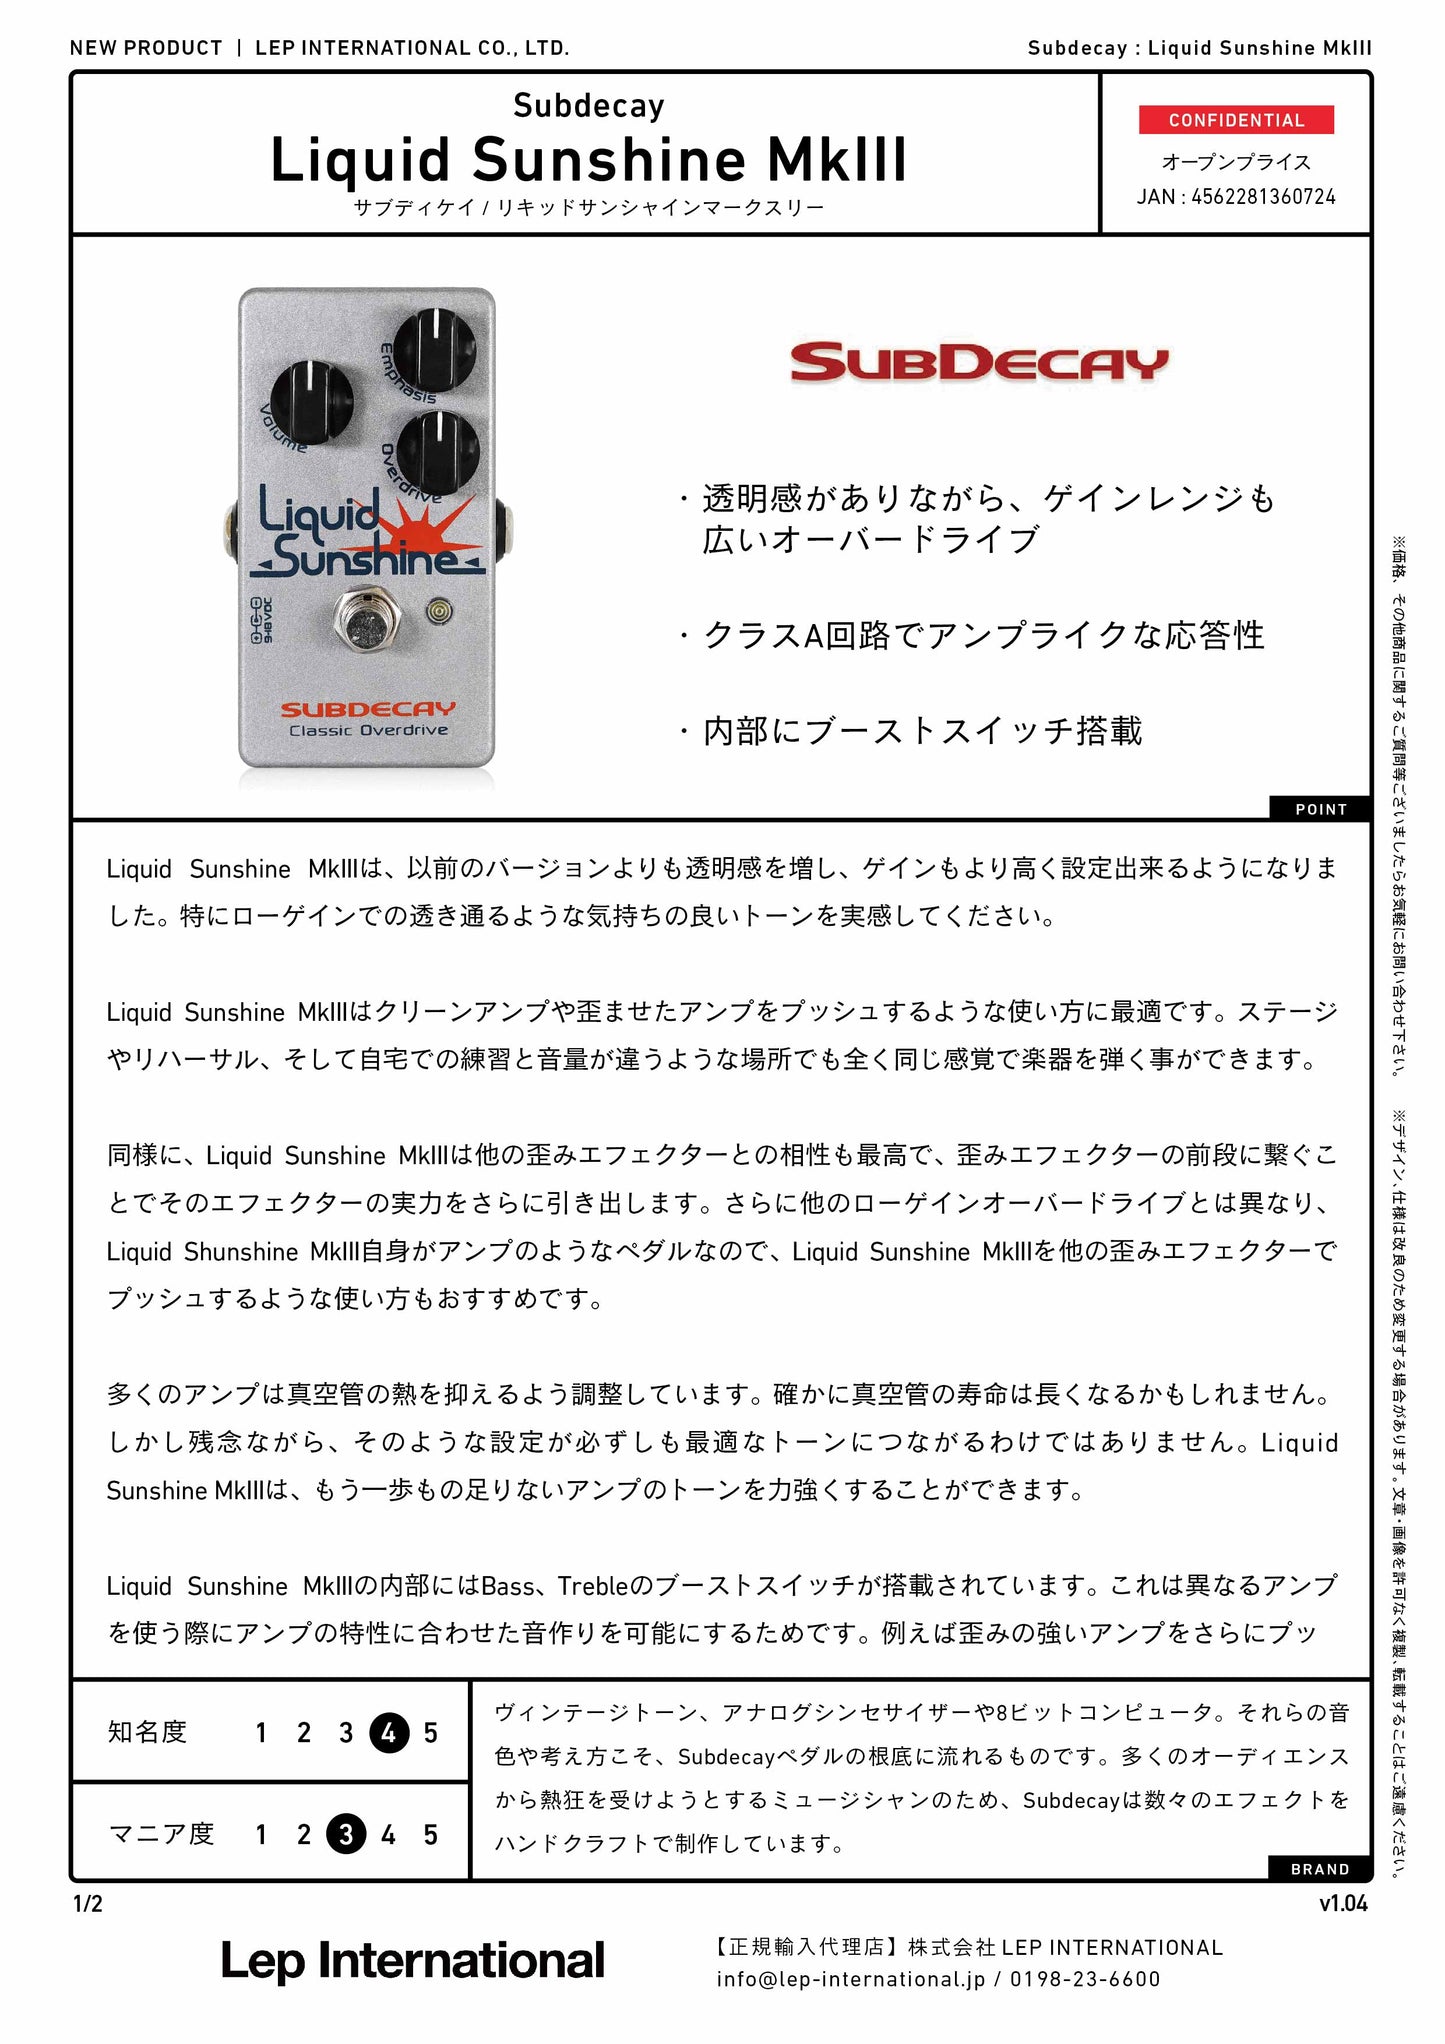 Subdecay/Liquid Sunshine MkIII